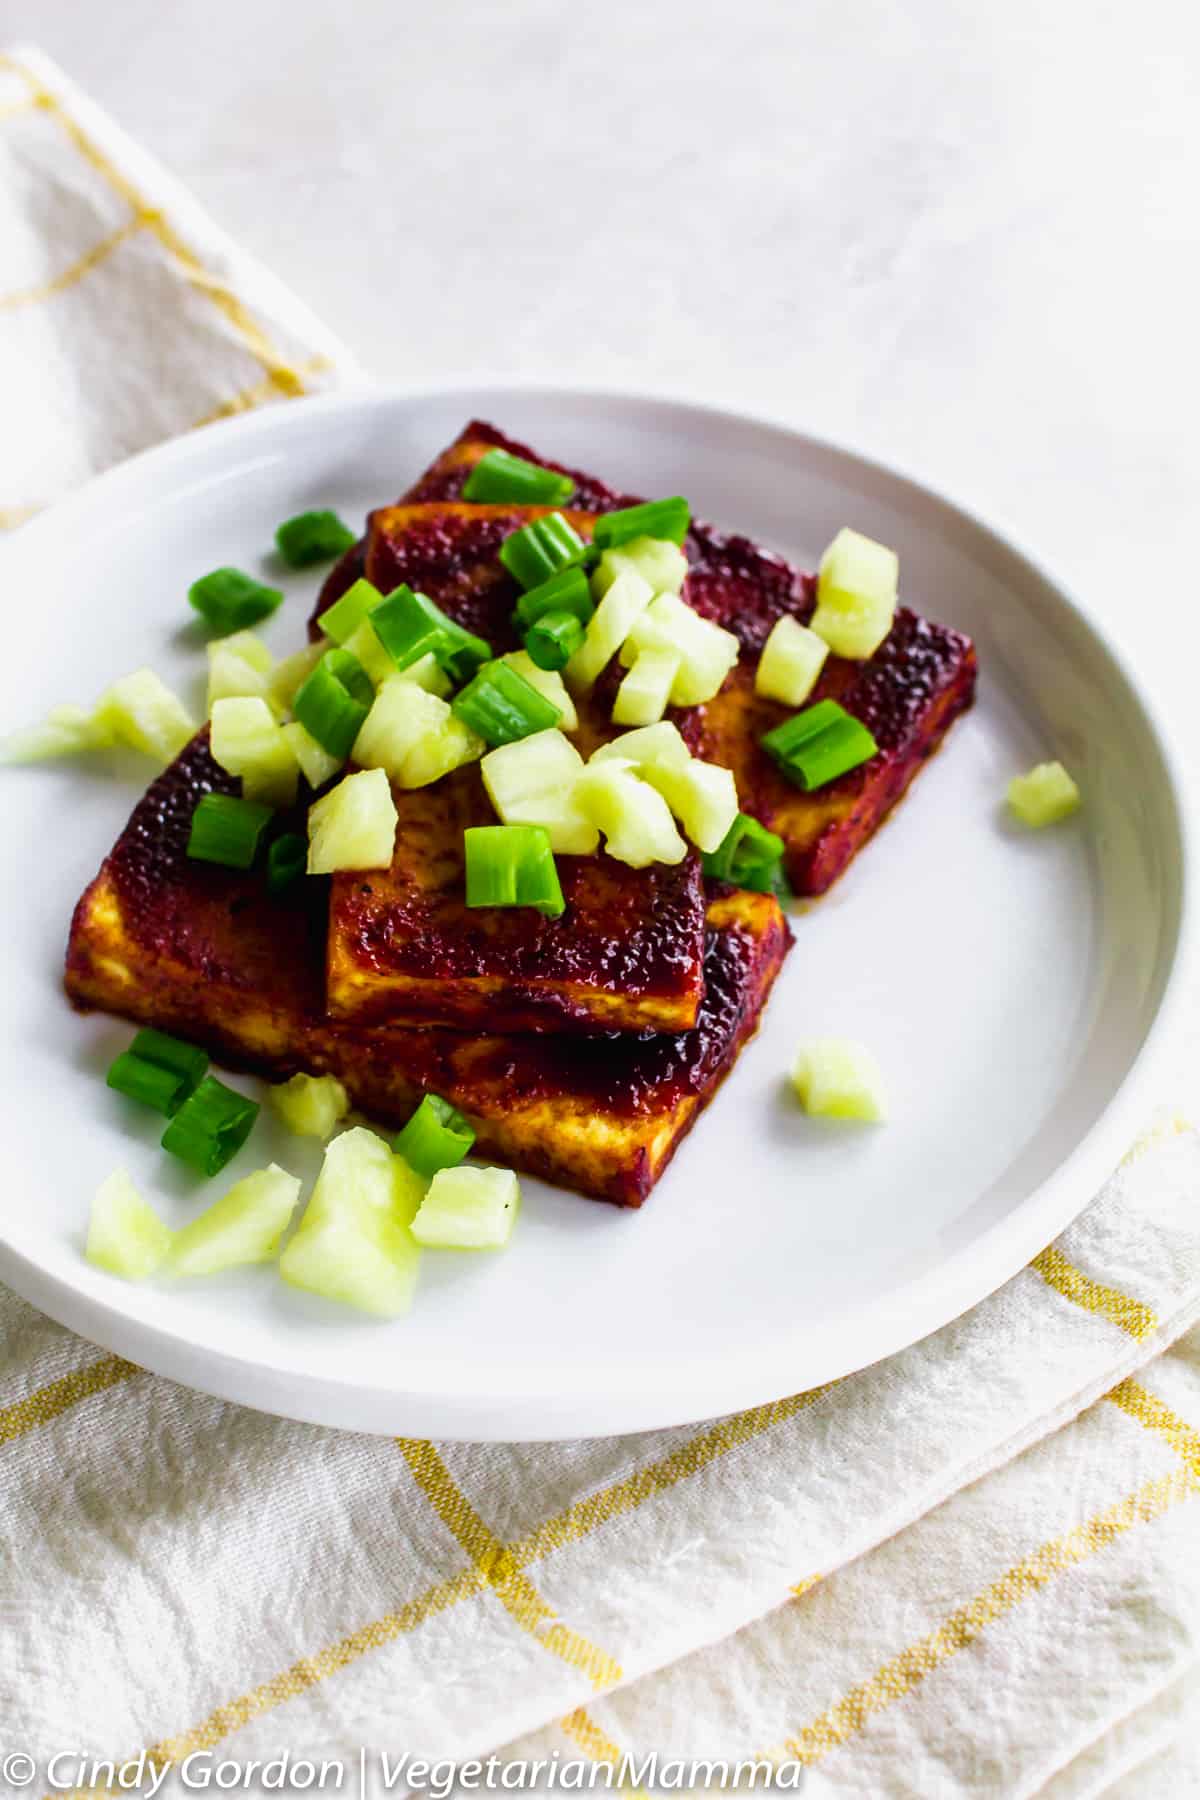 Pineapple BBQ Tofu